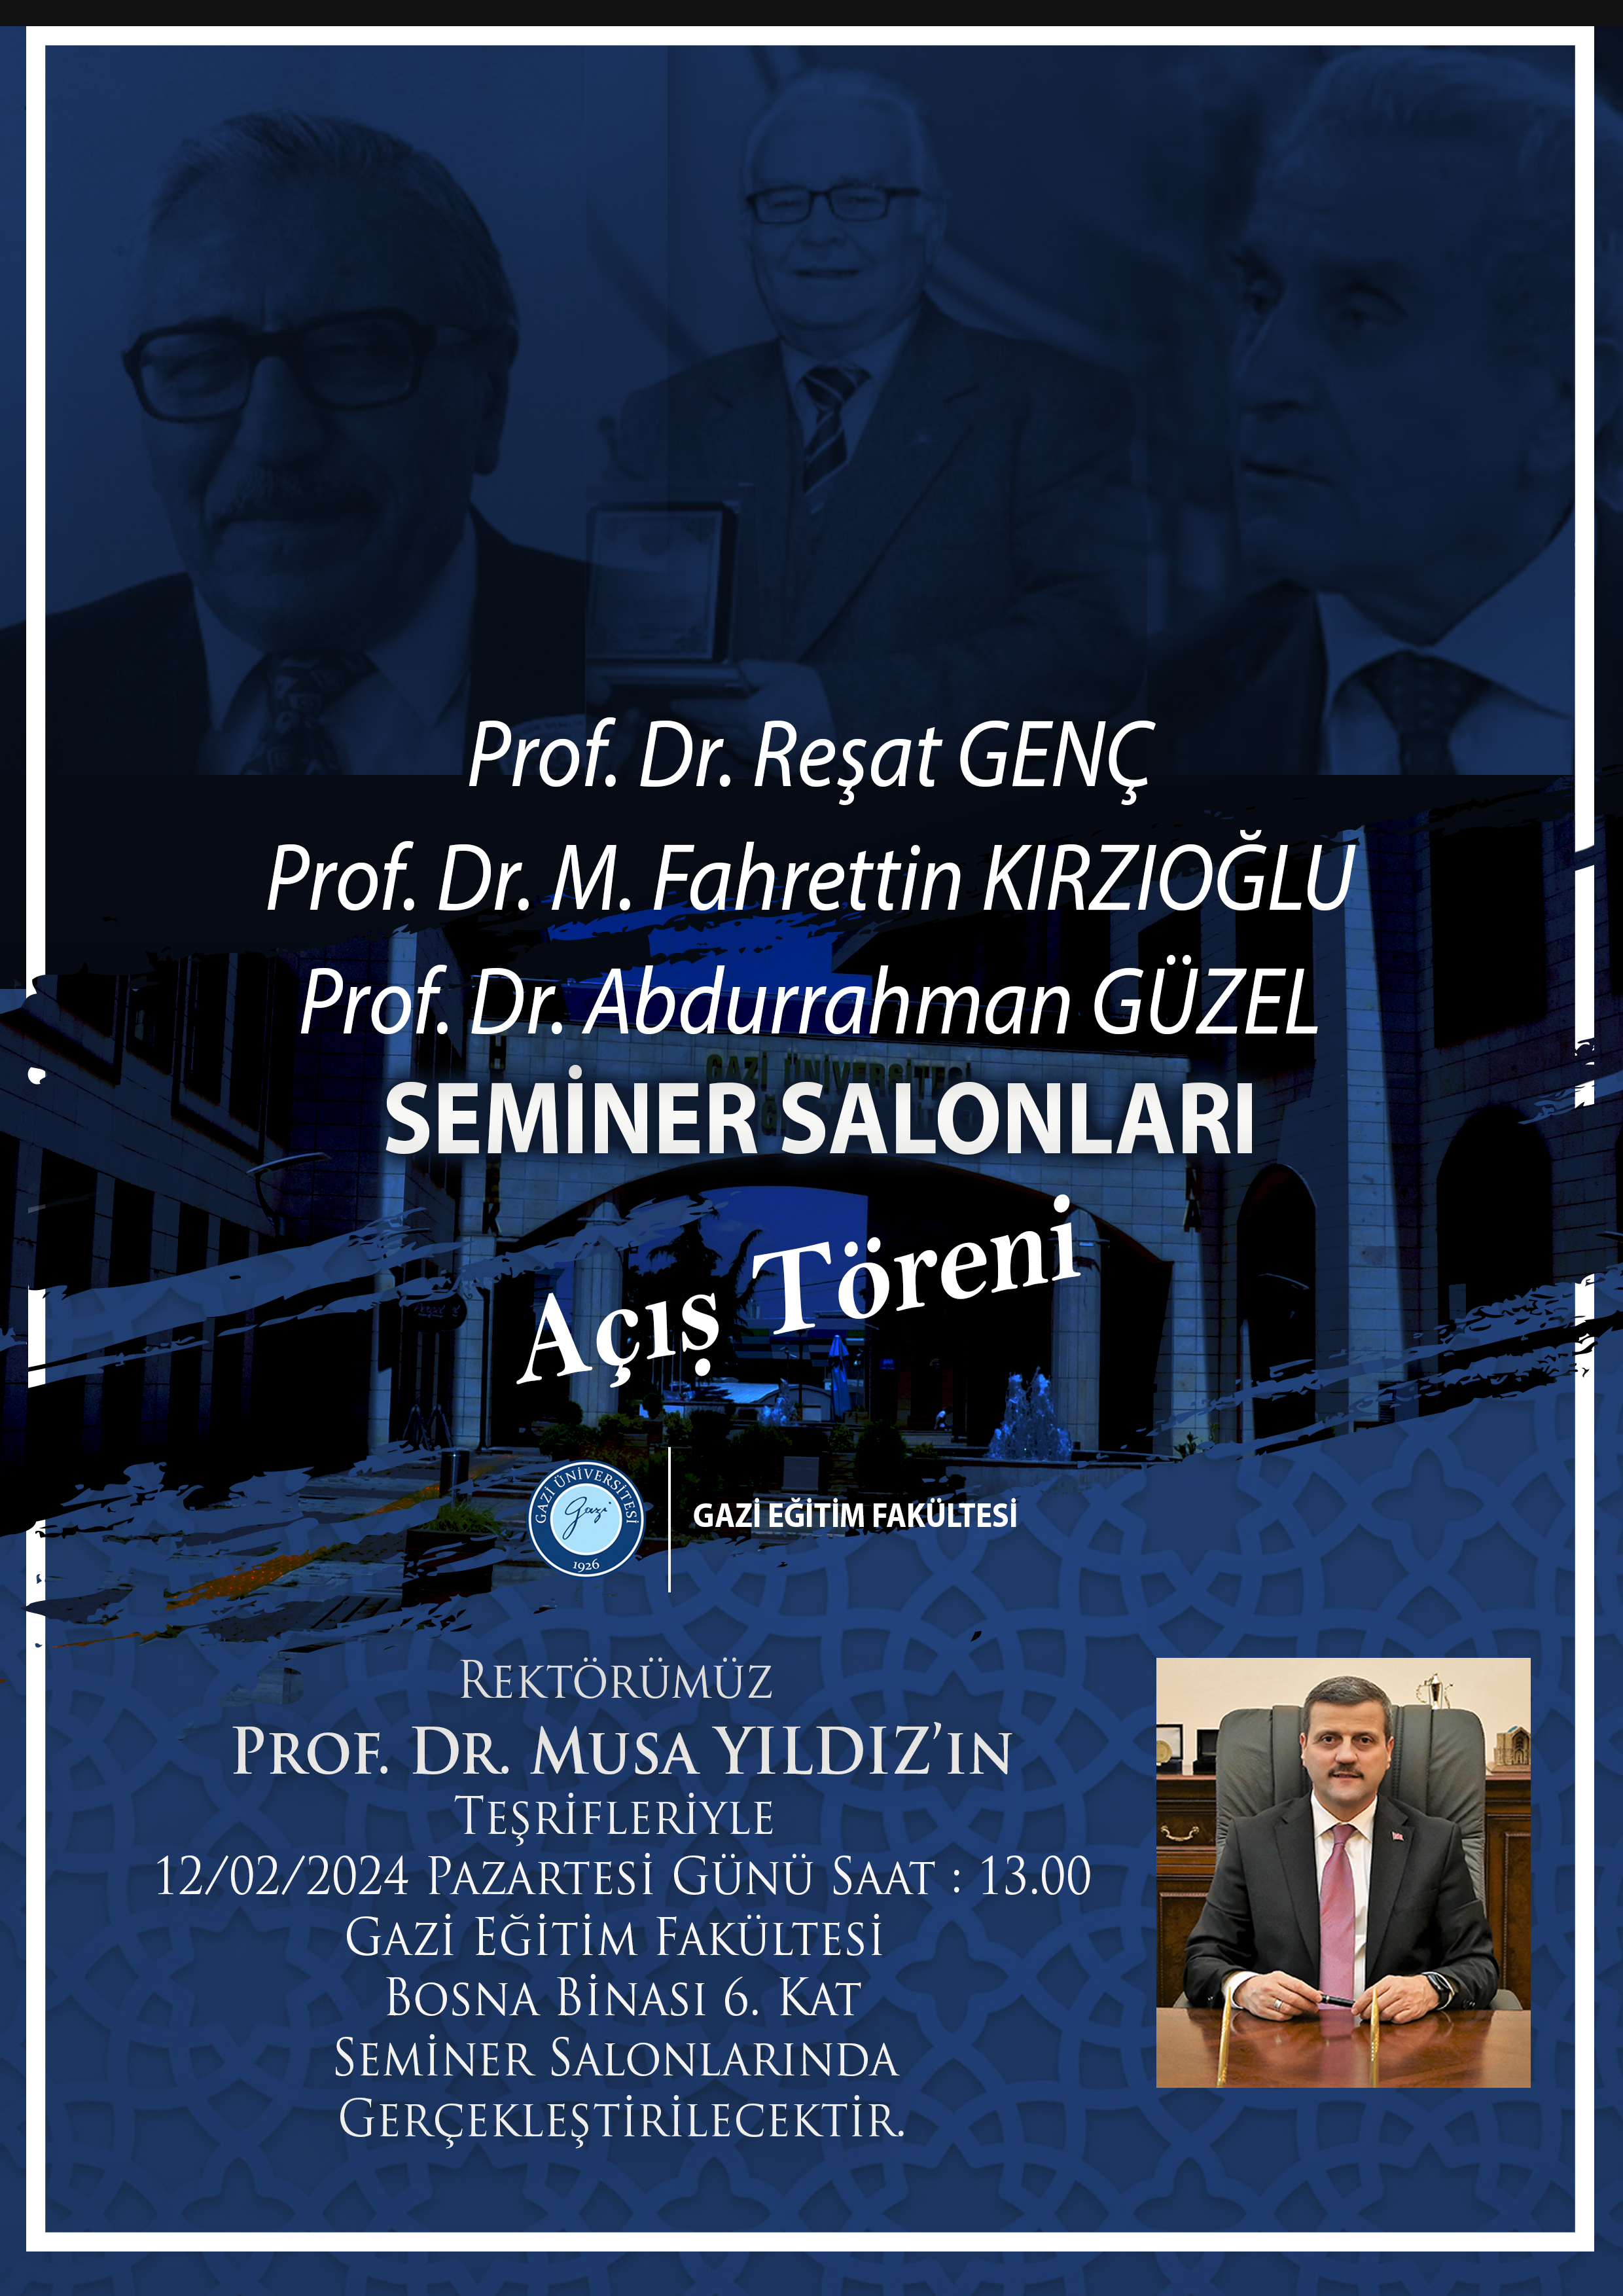 "Prof. Dr. Reşat GENÇ, Prof. Dr. Fahrettin KIRZIOĞLU, Prof. Dr. Abdurrahman GÜZEL Seminer Salonları" Açılış Töreni-1